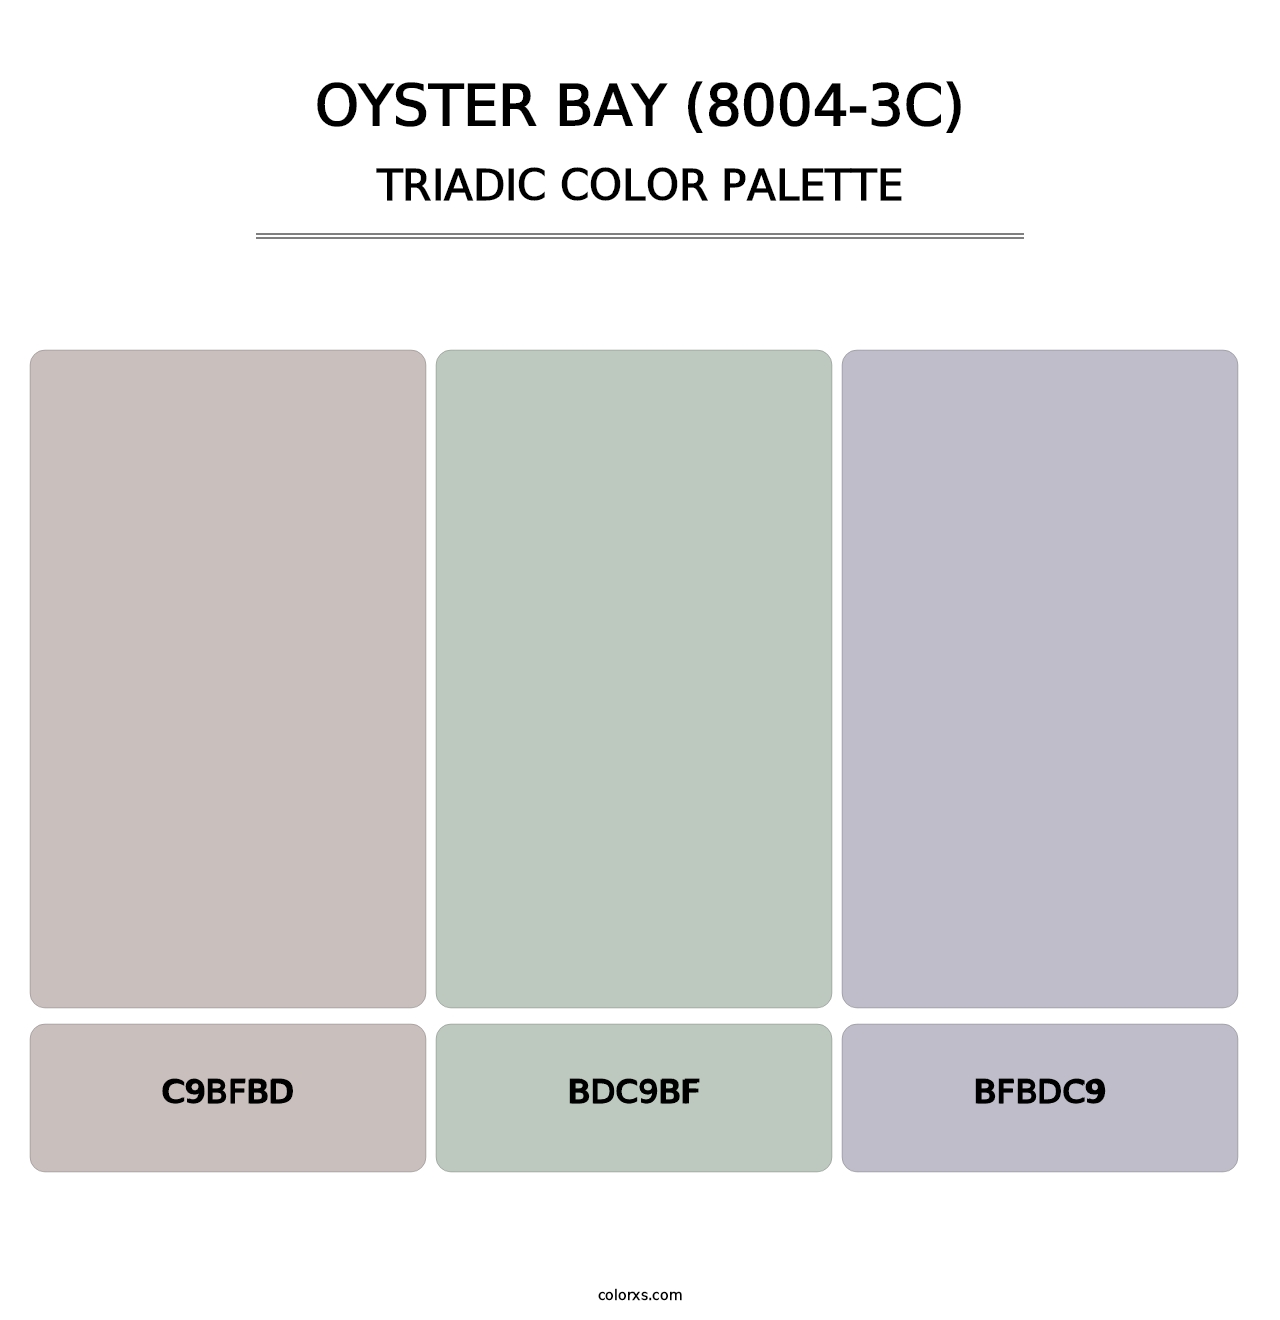 Oyster Bay (8004-3C) - Triadic Color Palette